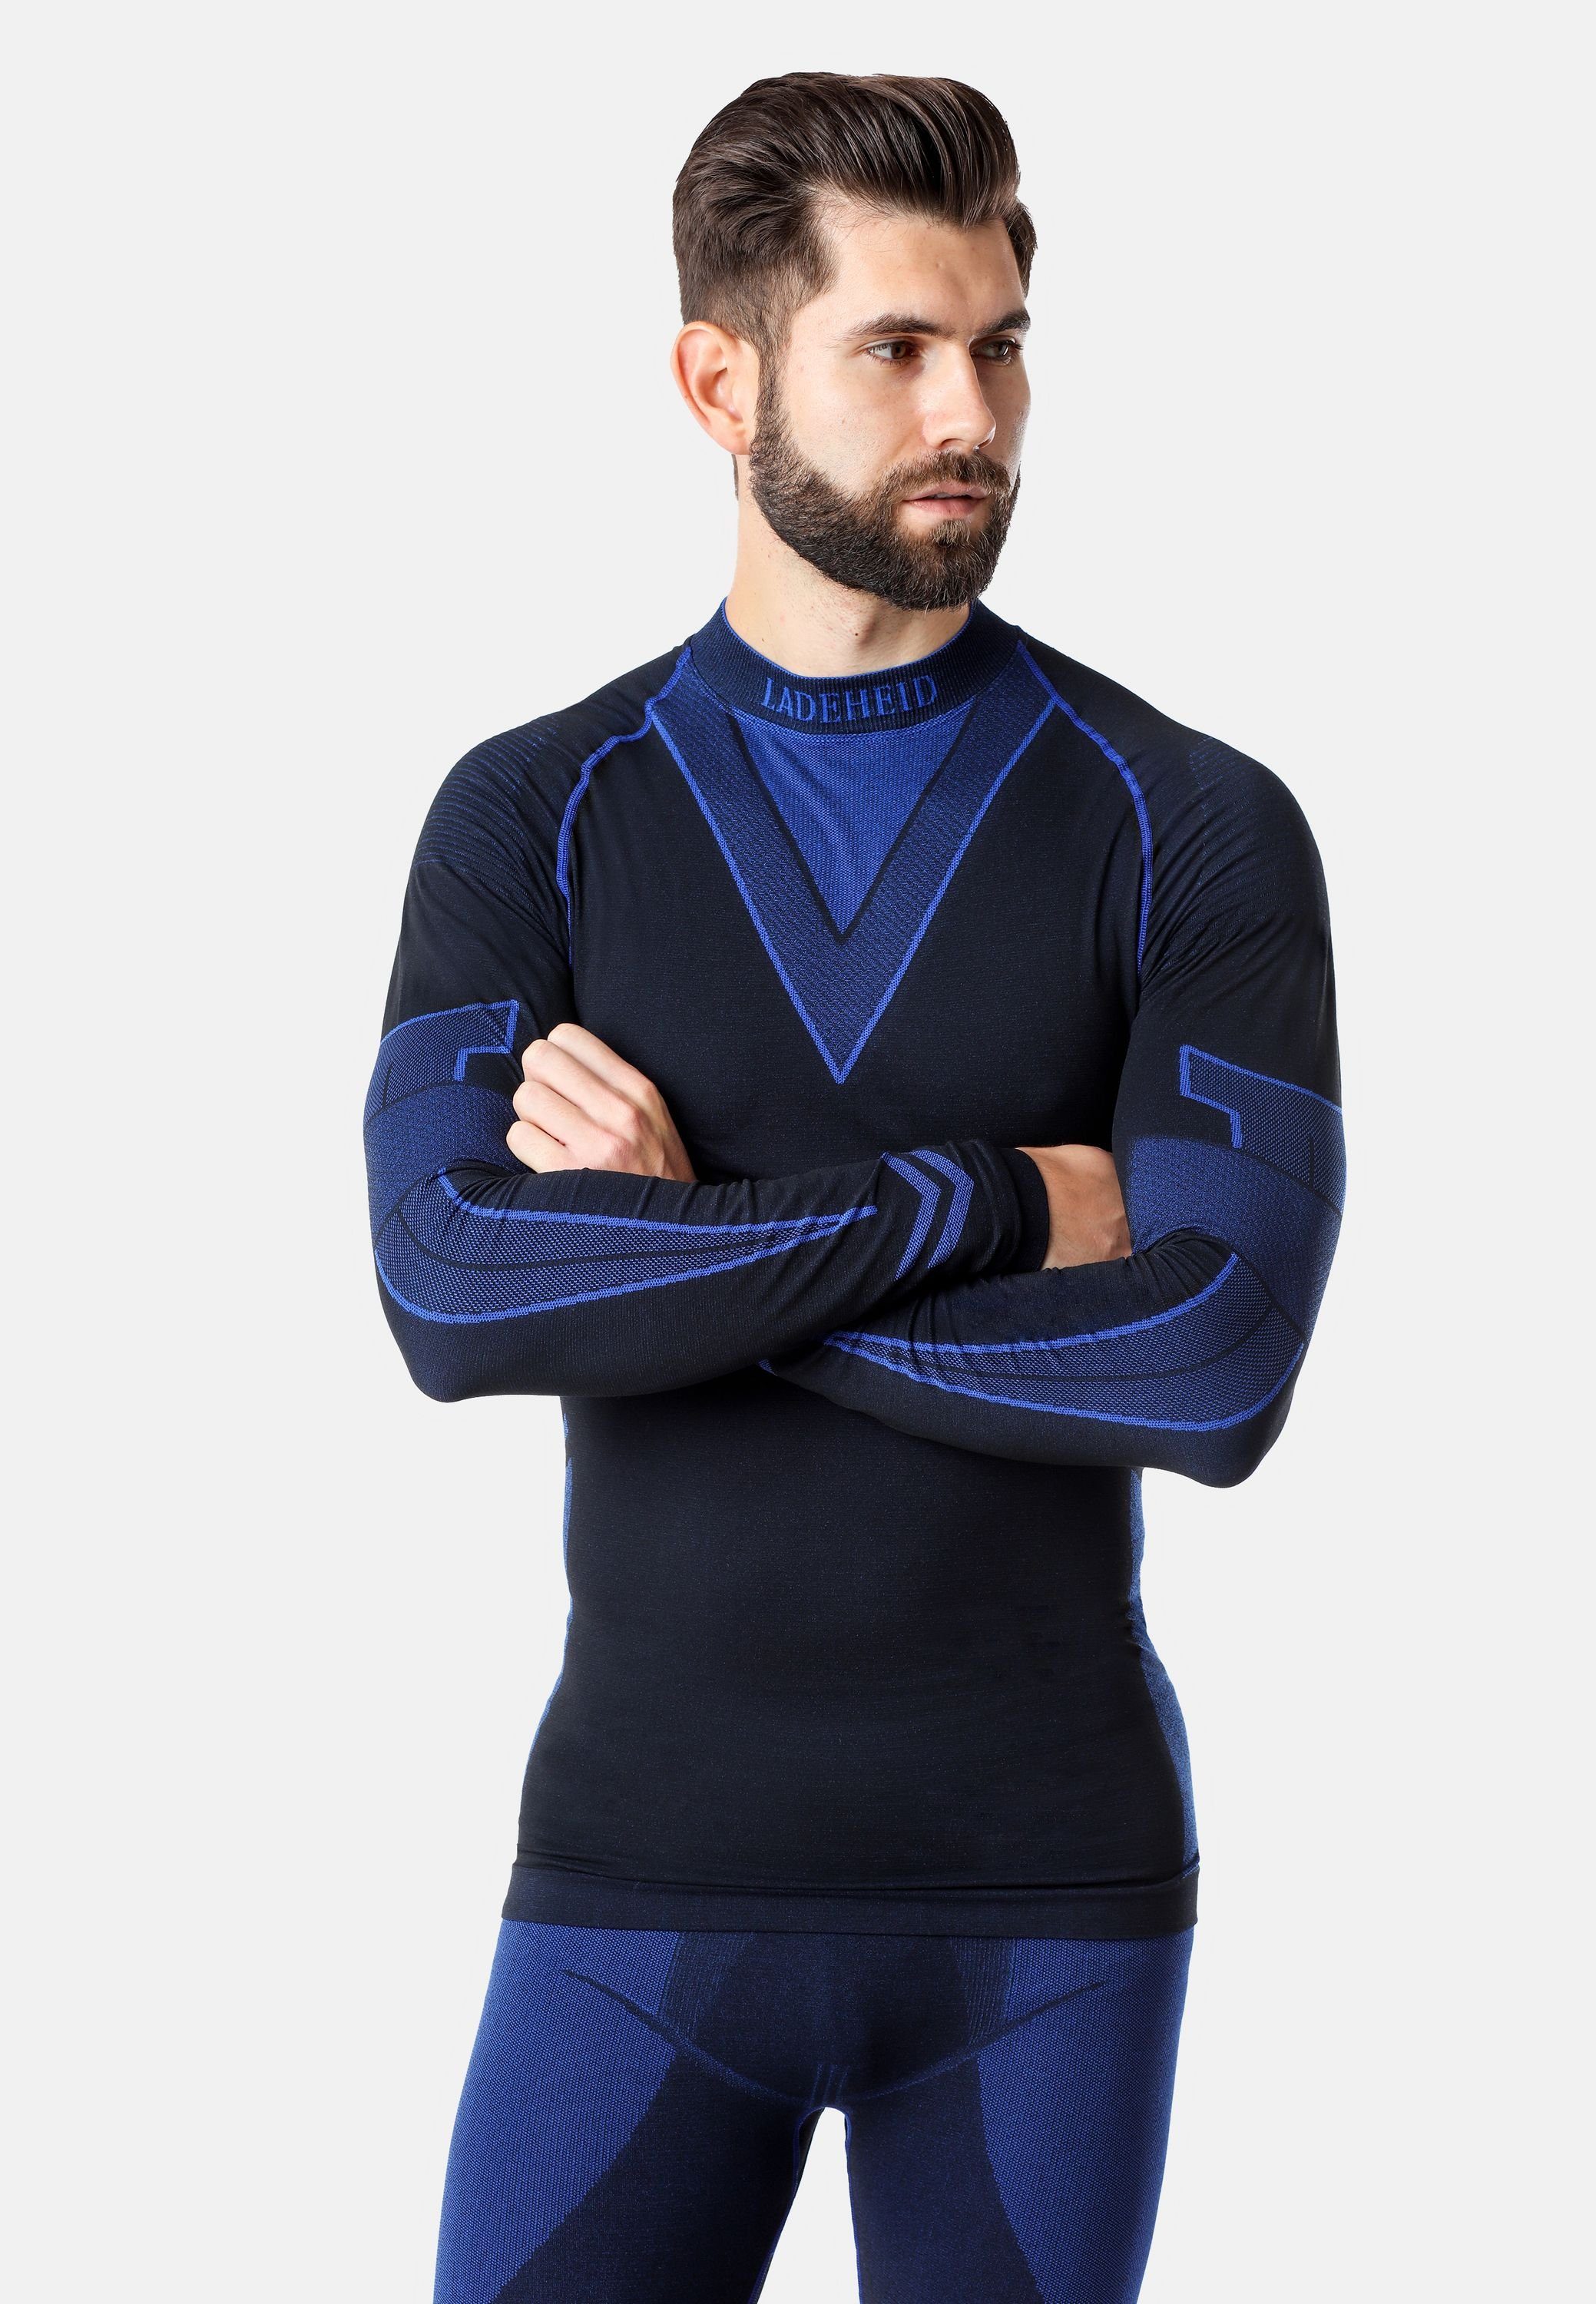 Herren Schwarz/Marineblau Shirt Funktionsunterwäsche Thermoaktiv Ladeheid LAGI001 Funktionsunterhemd langarm